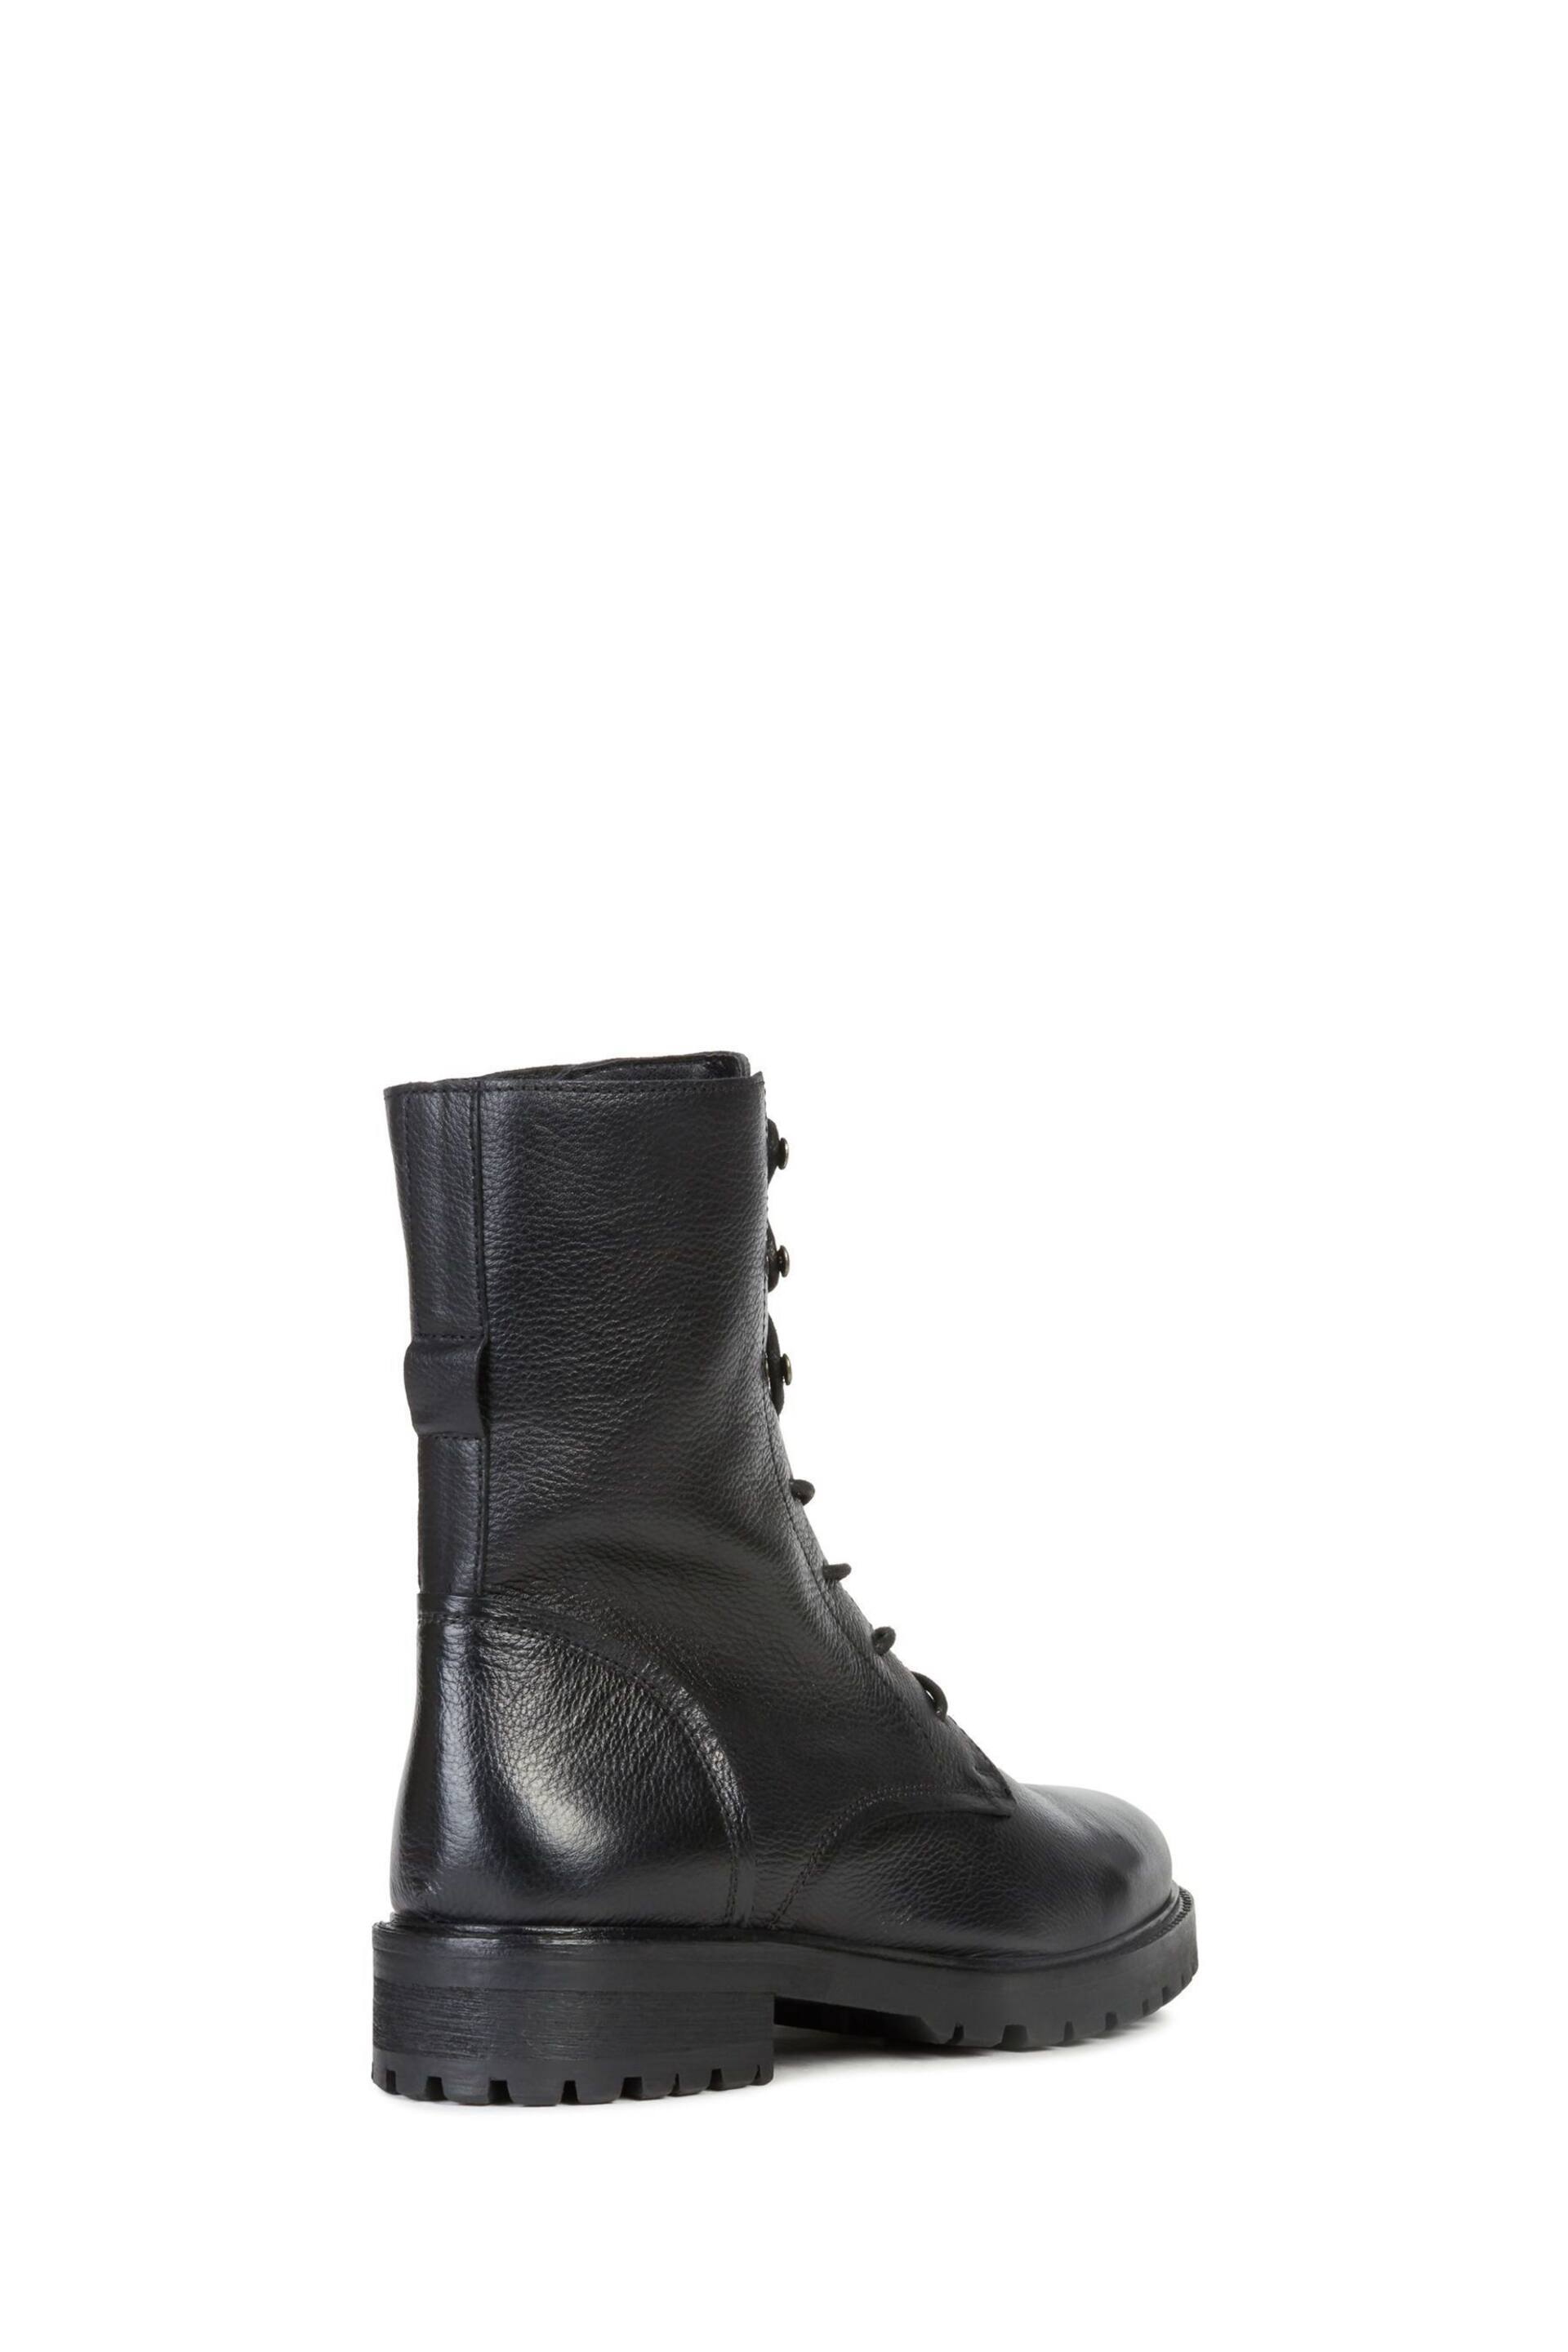 Geox Womens Hoara Black Boots - Image 3 of 7